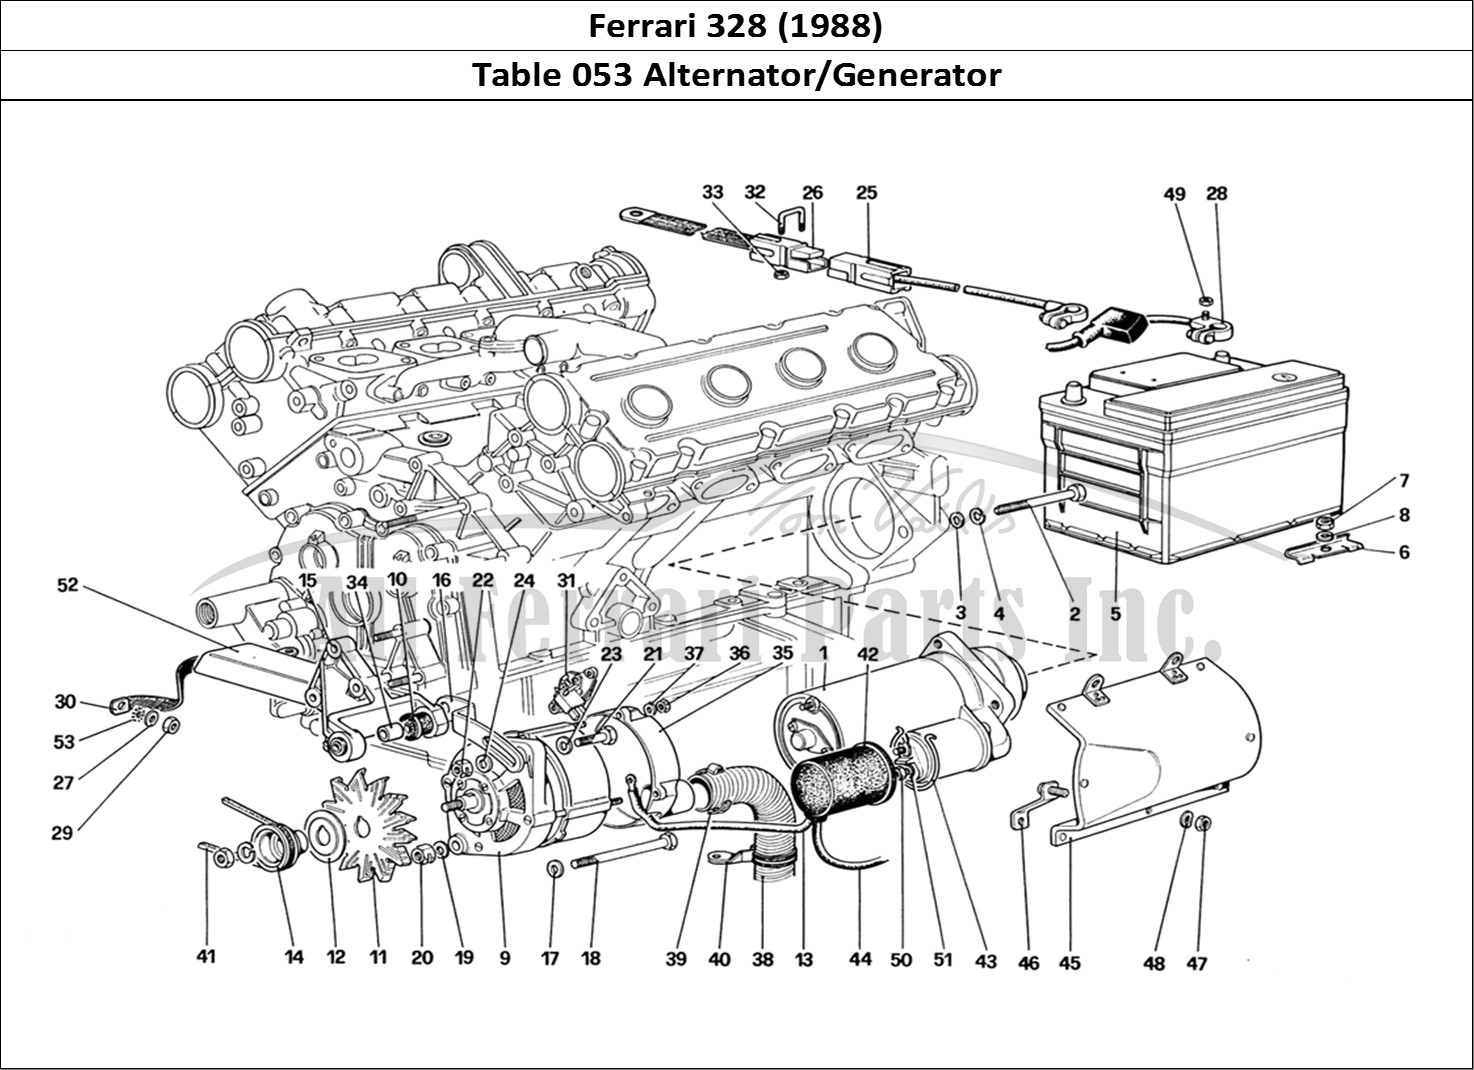 Ferrari Parts Ferrari 328 (1988) Page 053 Electric Generating Syste